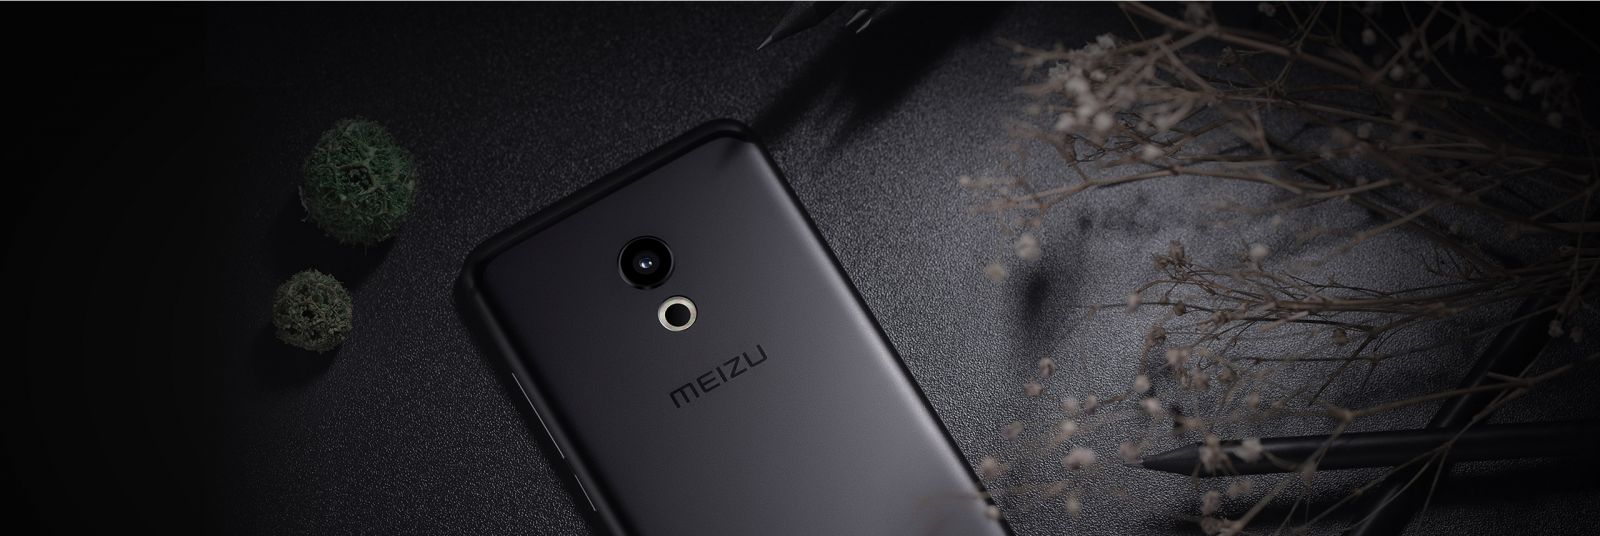 Смартфон nothing phone 2a. Meizu Pro 6 32gb Grey/Black.